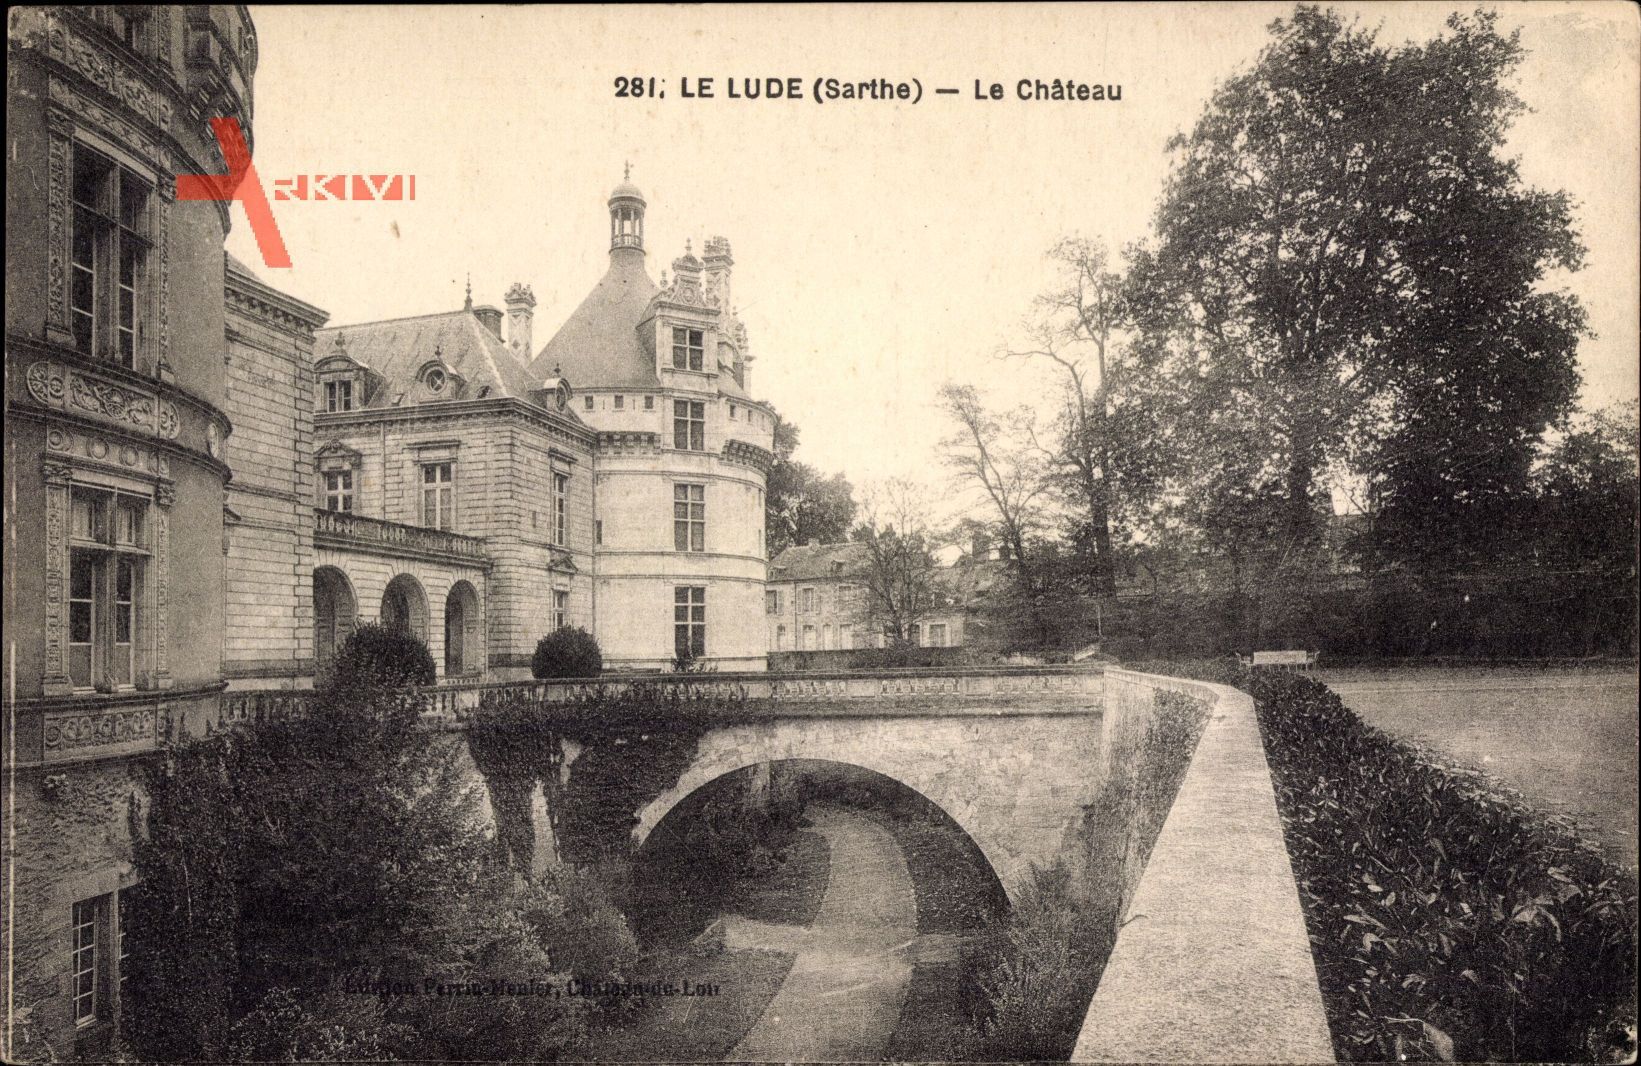 Le Lude Sarthe, Le Chateau, Blick auf das Schloss, Brücke